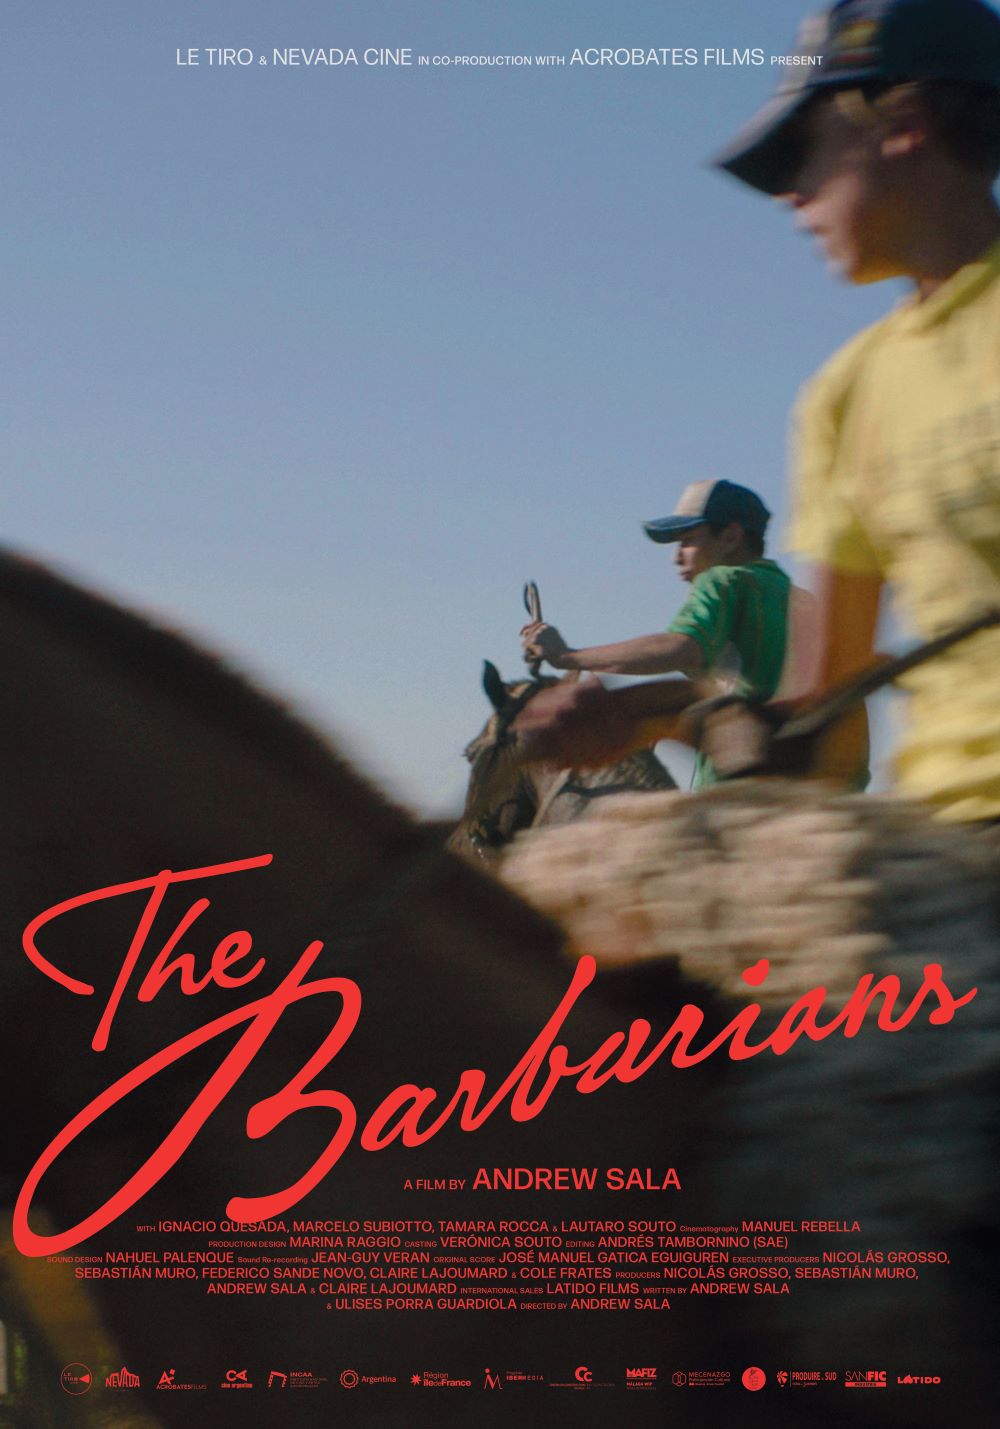 THE BARBARIANS - Latido Films